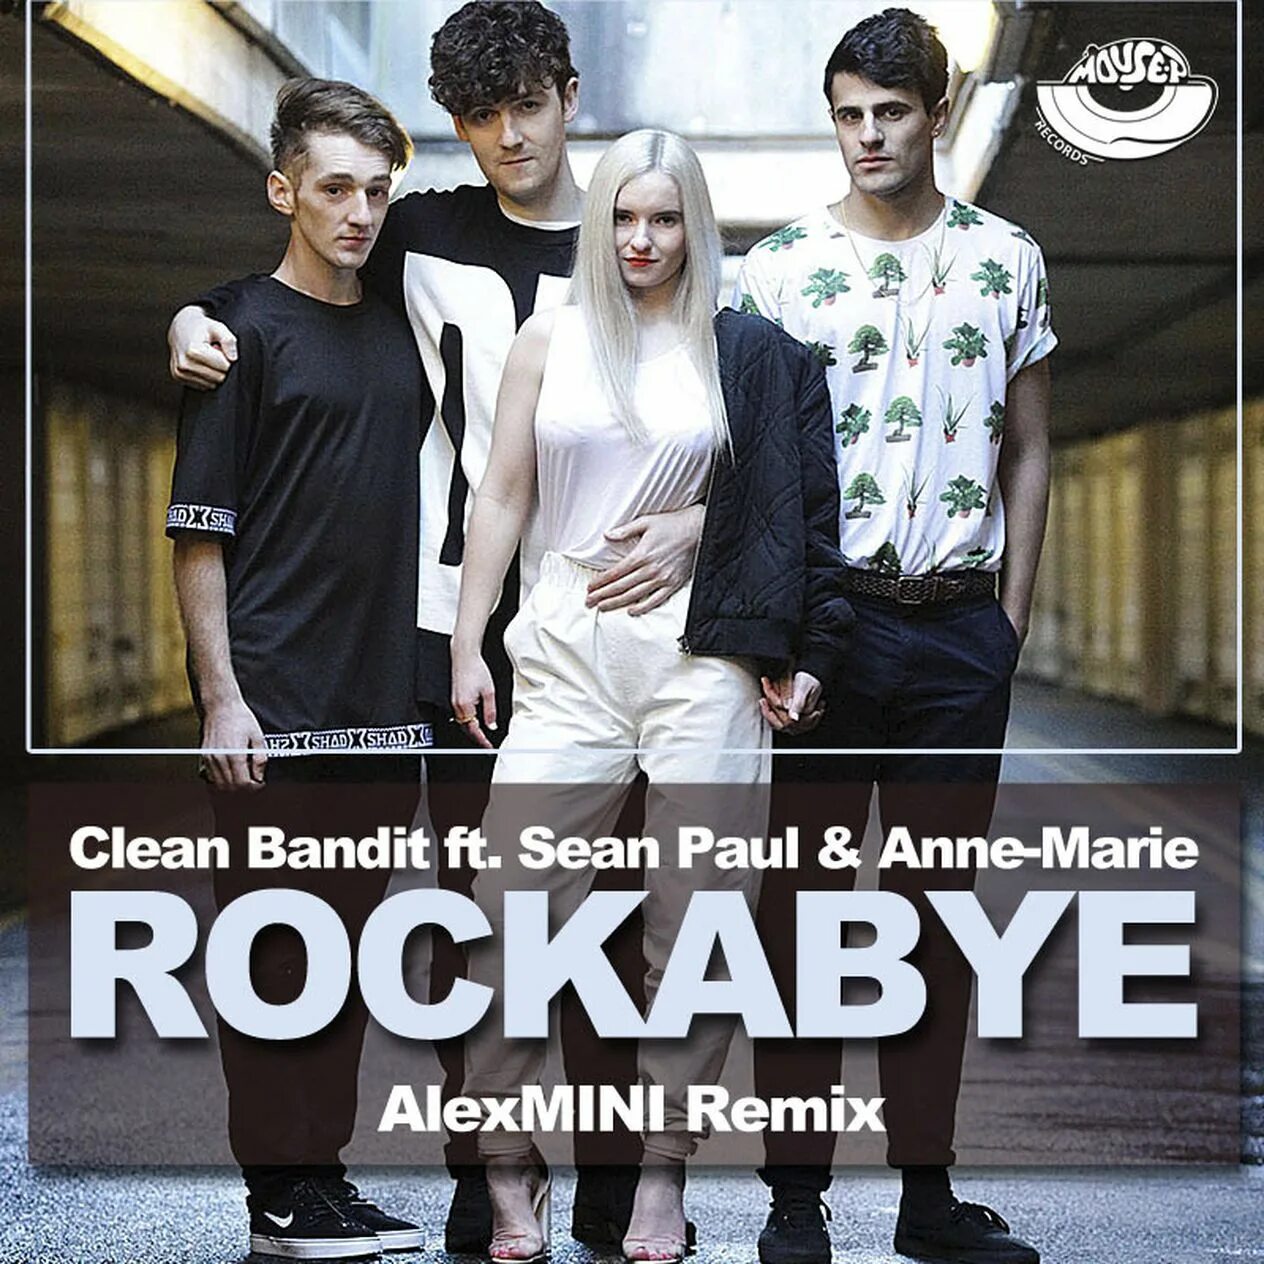 Sean Paul & Anne-Marie. Bandit & Sean Paul & Anne Marie. Клин бандит рокабай. Rockabye Baby clean Bandit.